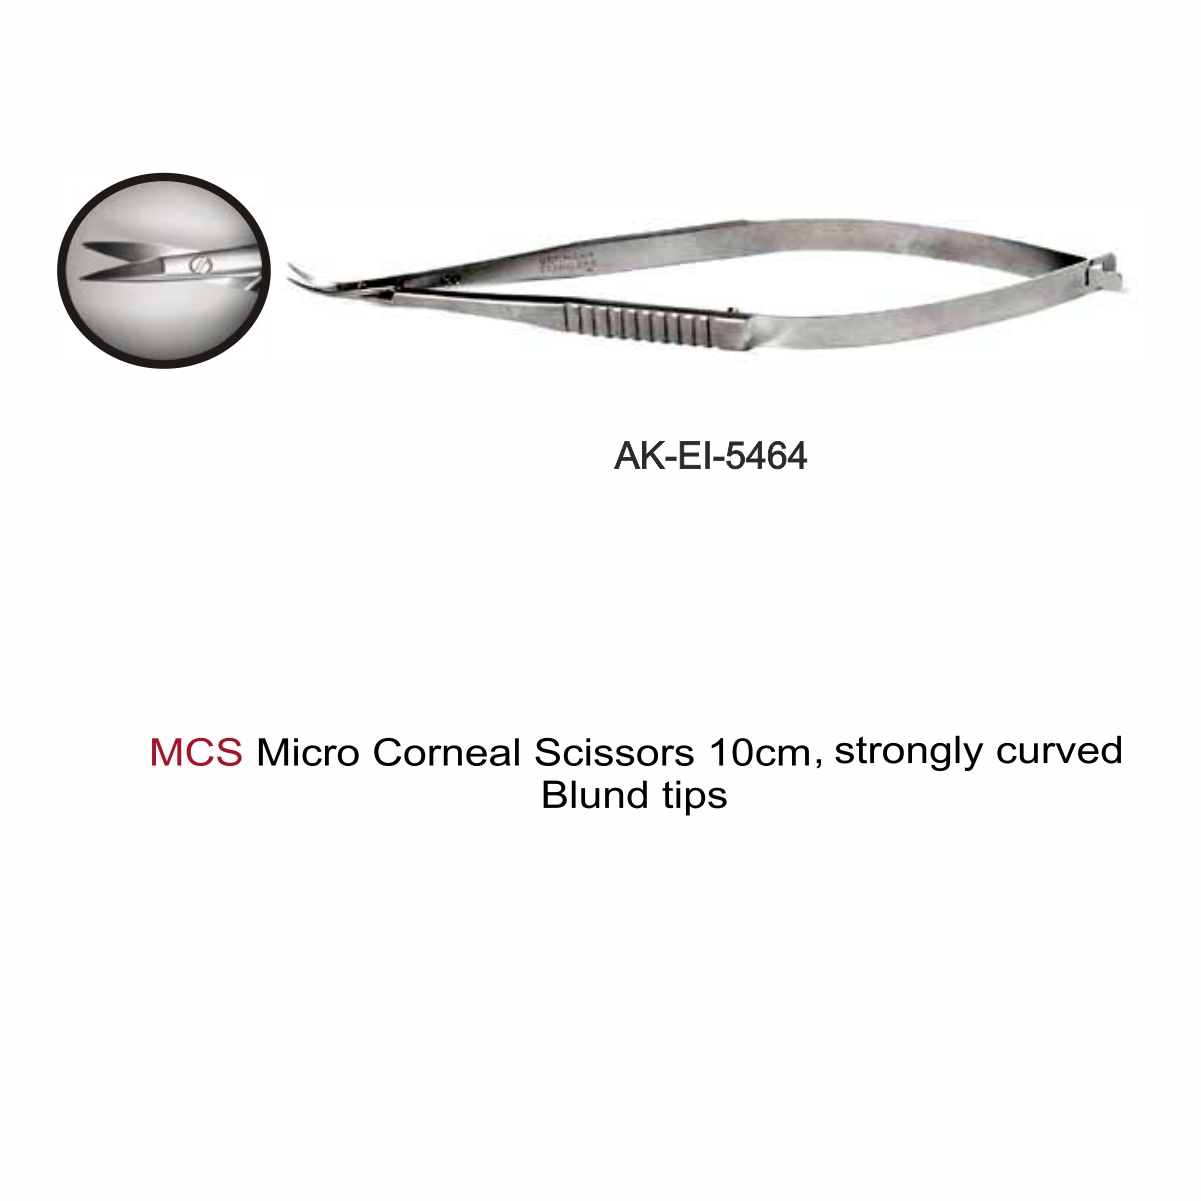 MCS Micro Corneal Scissors